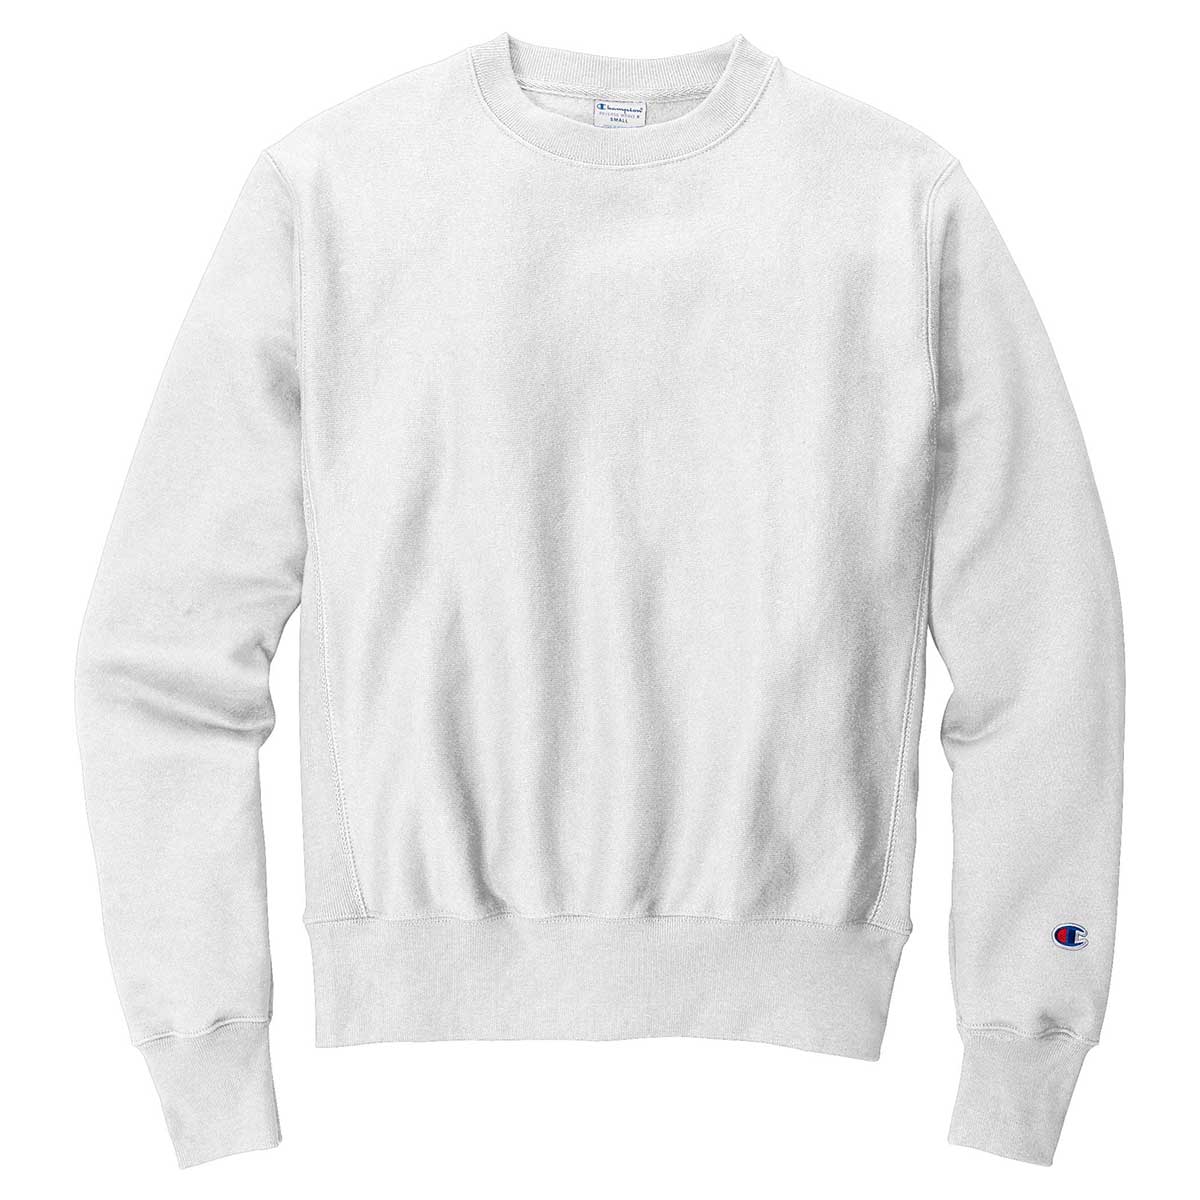 Champion Reverse Weave Yankees sweatshirt in white